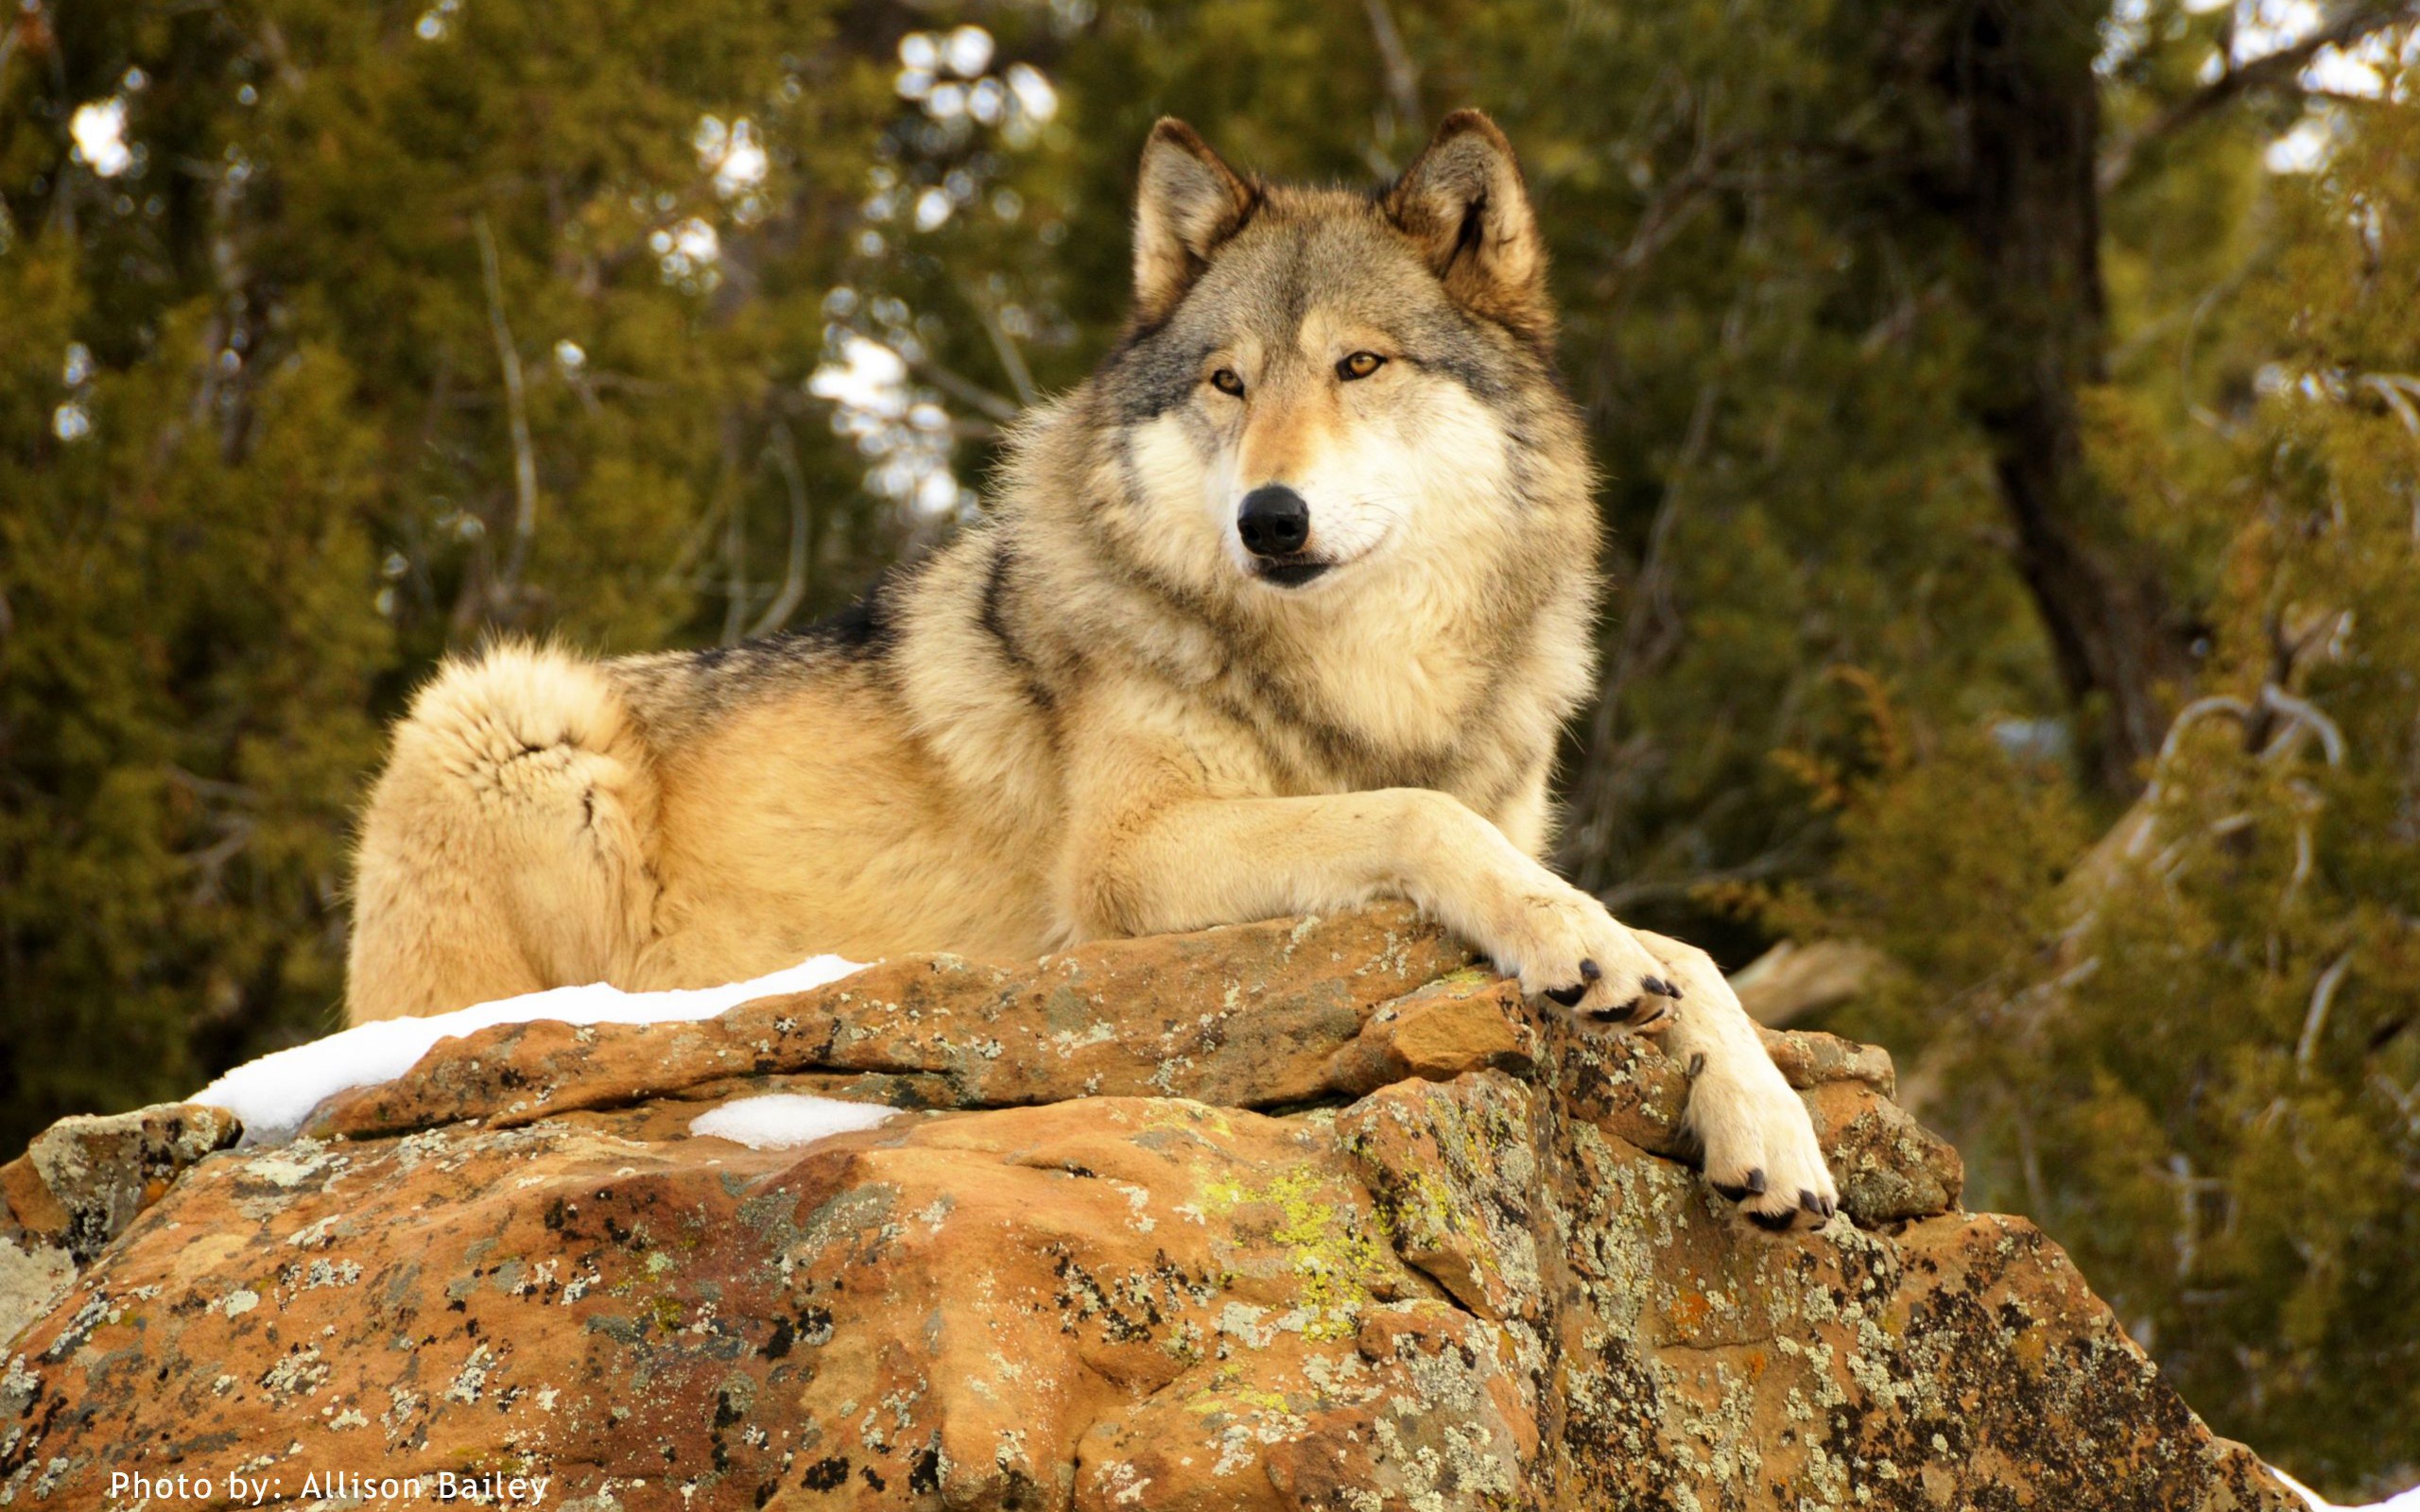 Wolf's Name: Dakota by Allison Bailey